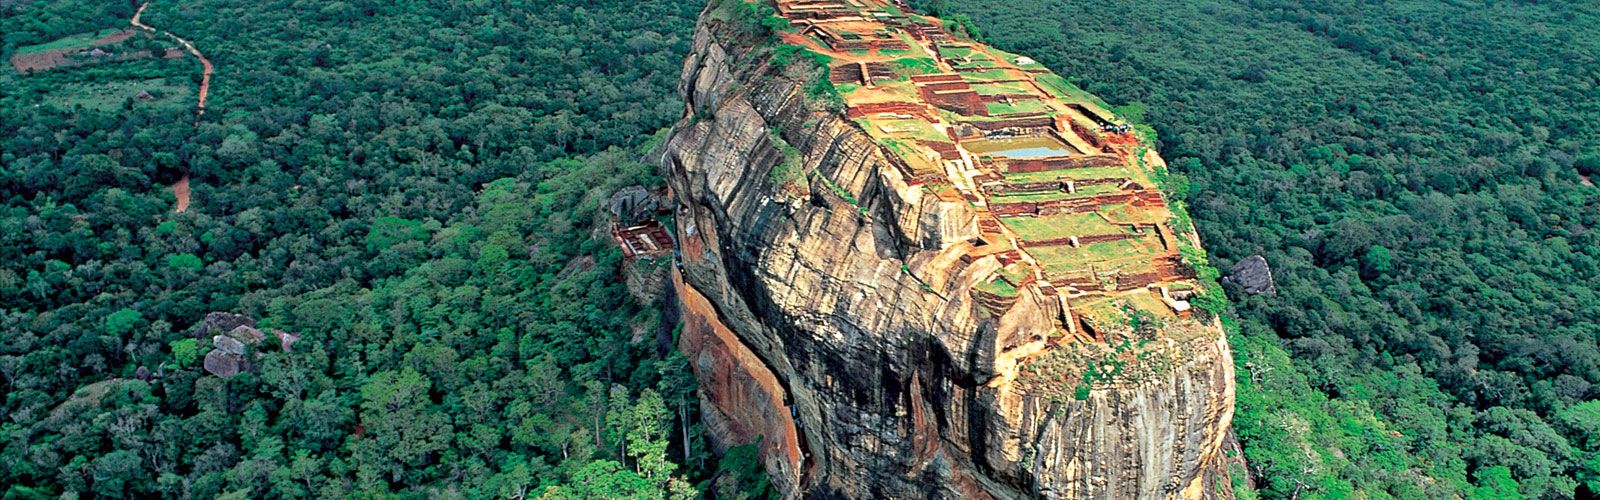 Beautiful reasons to visit Sri Lanka | CNN